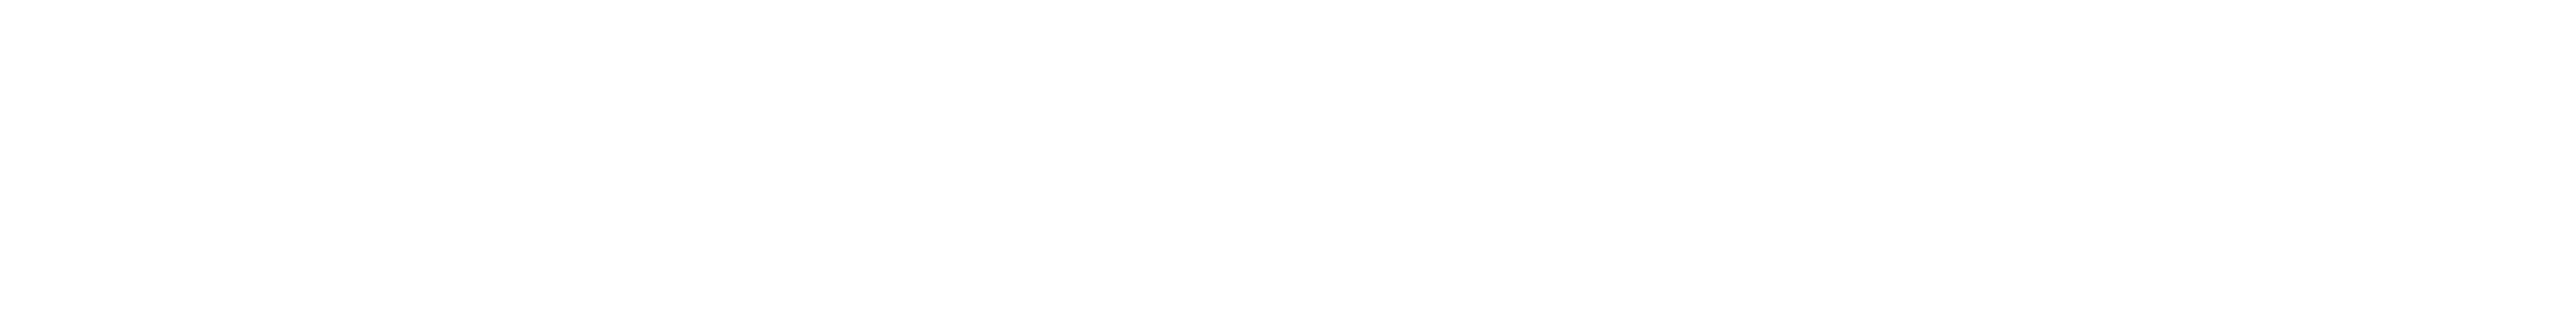 professional series logo